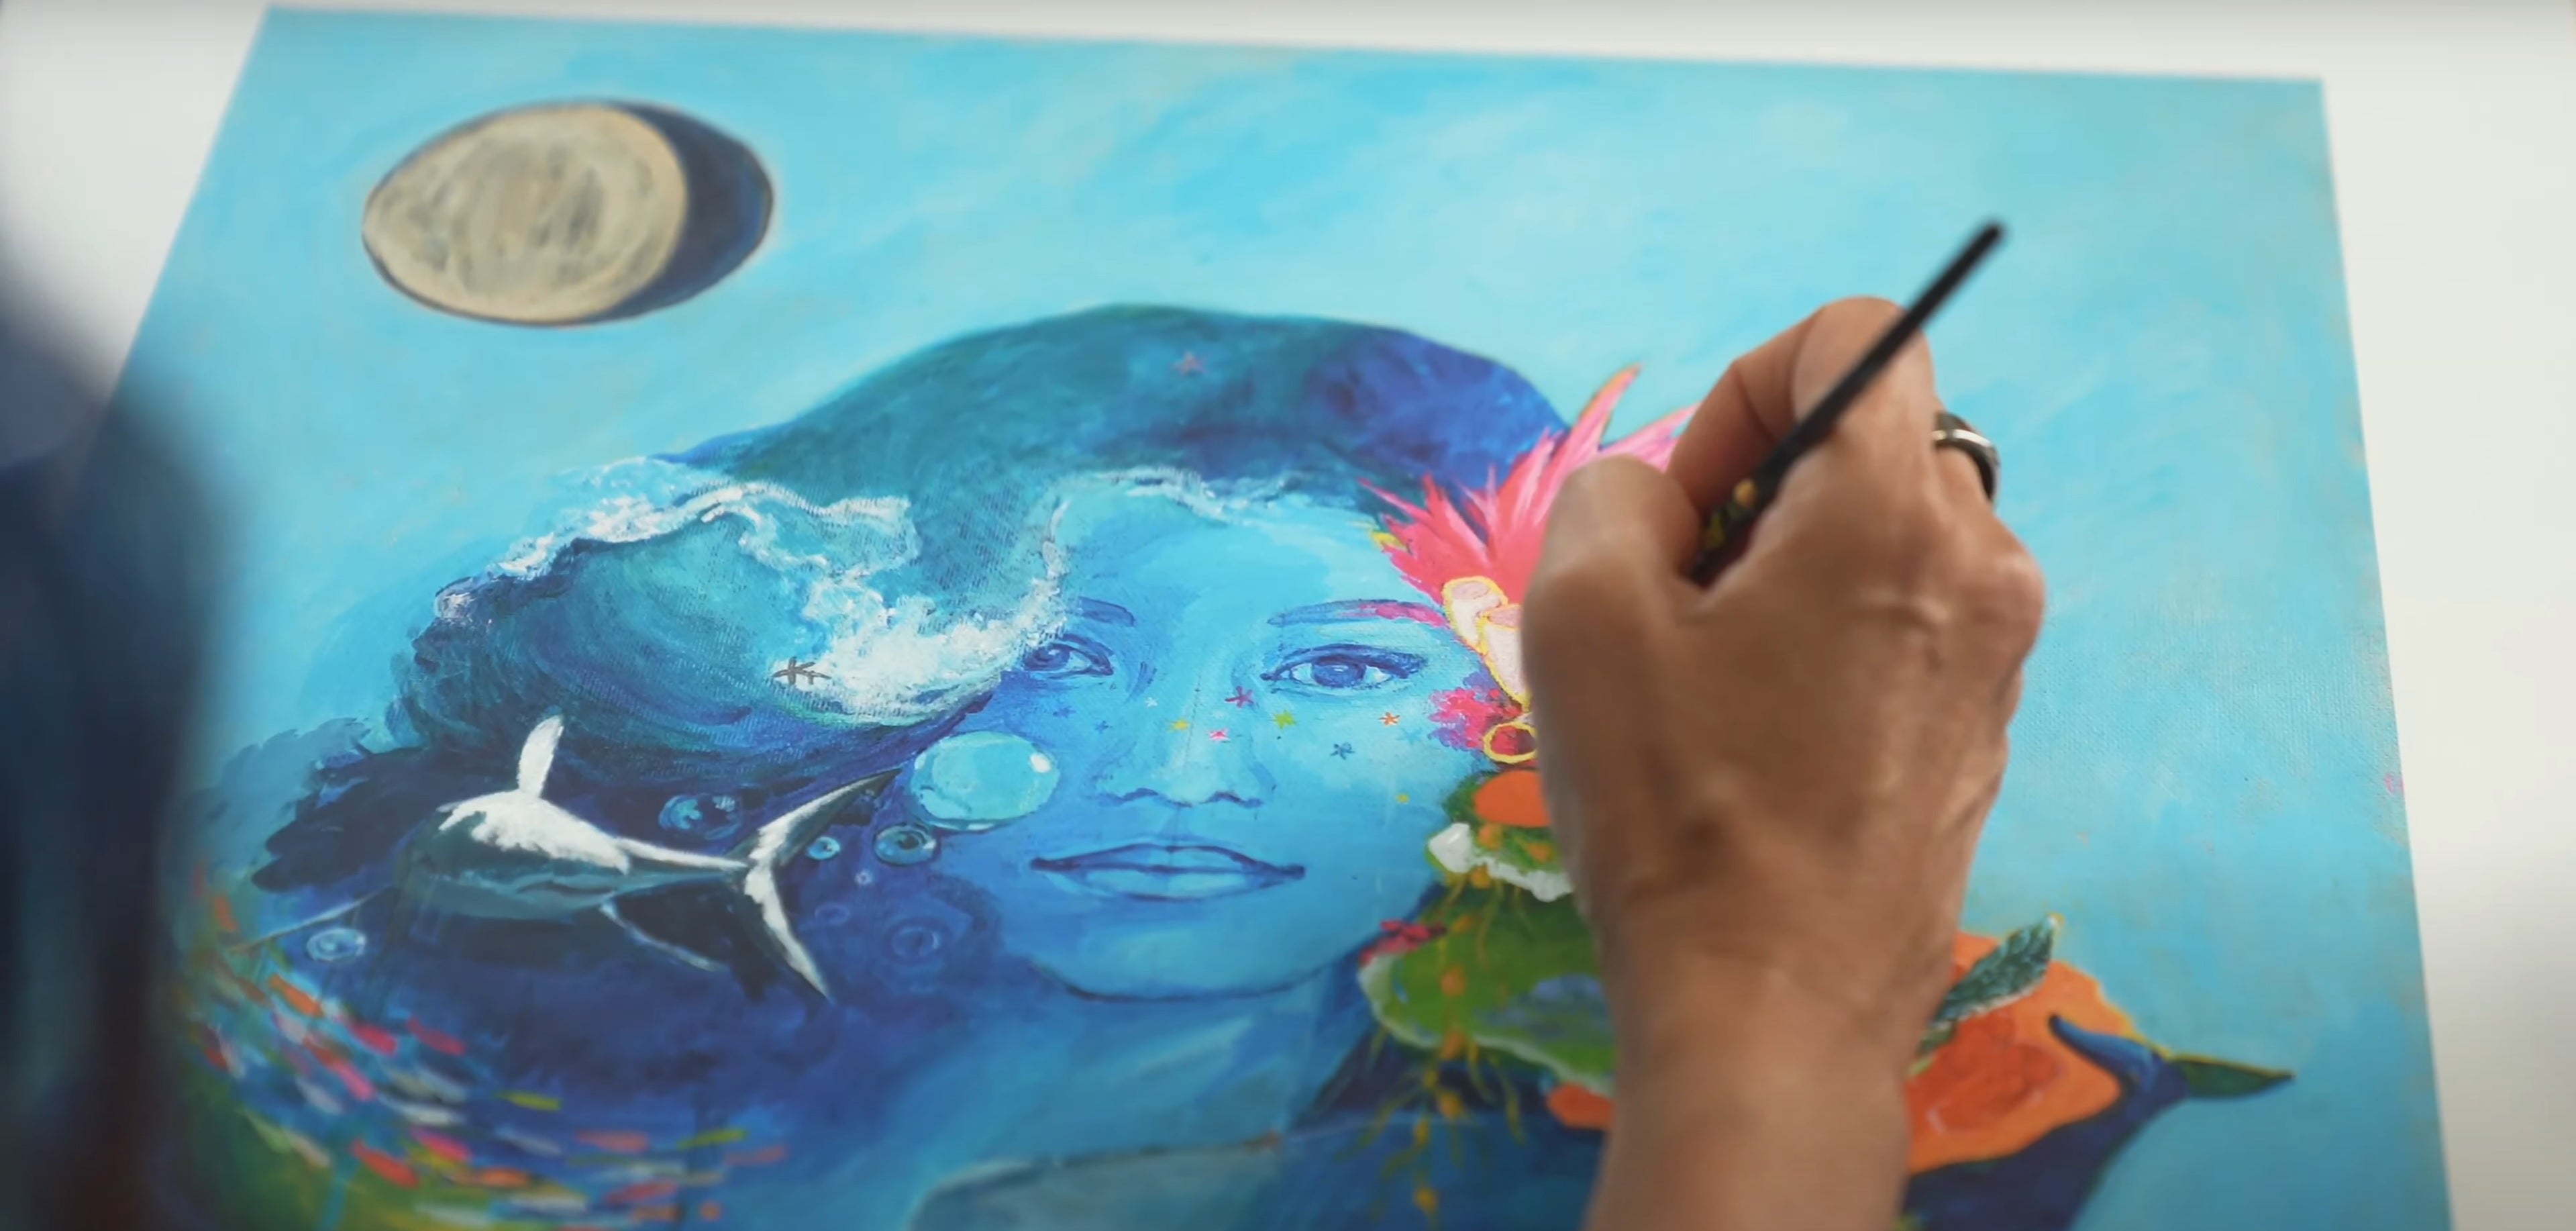 Load video: Vanishing Murals NFT Art Collection Launch Teaser